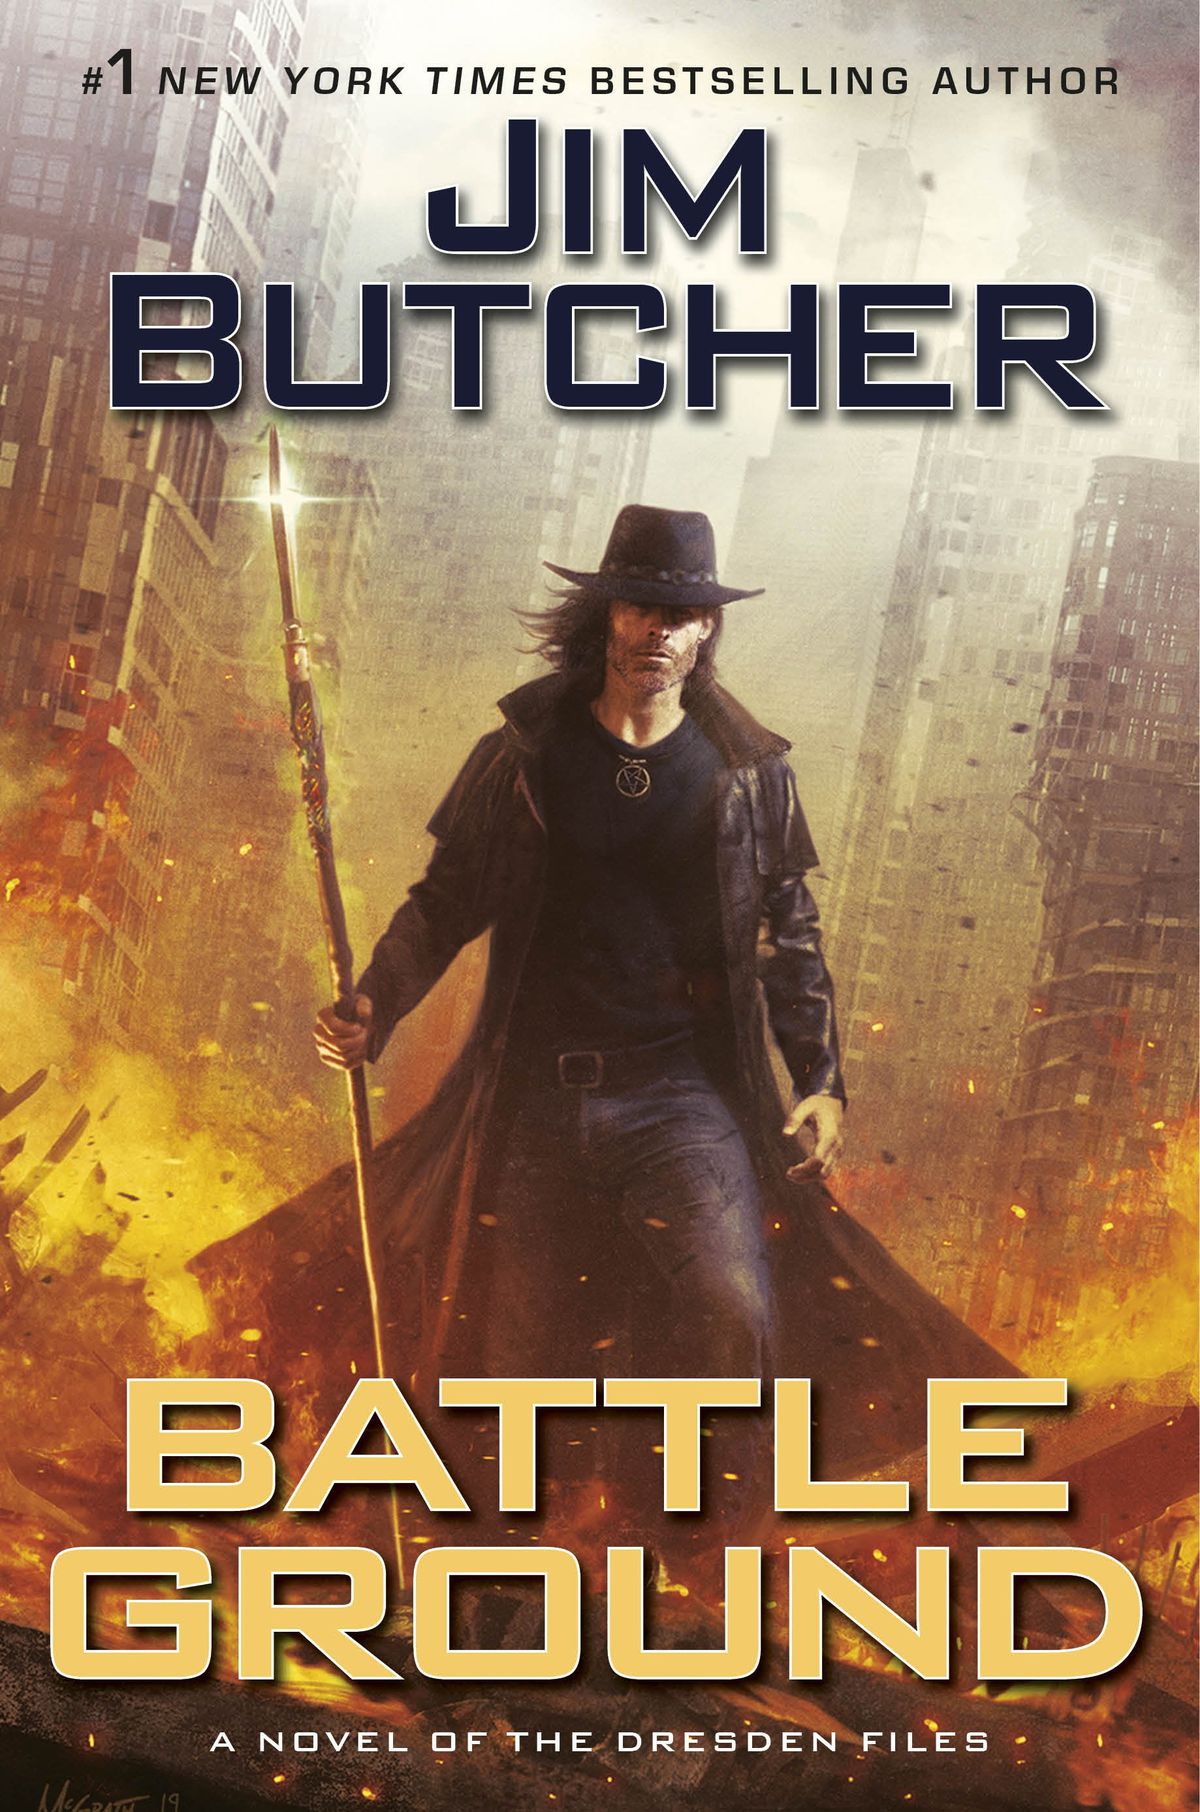 Battle Ground by Jim Butcher